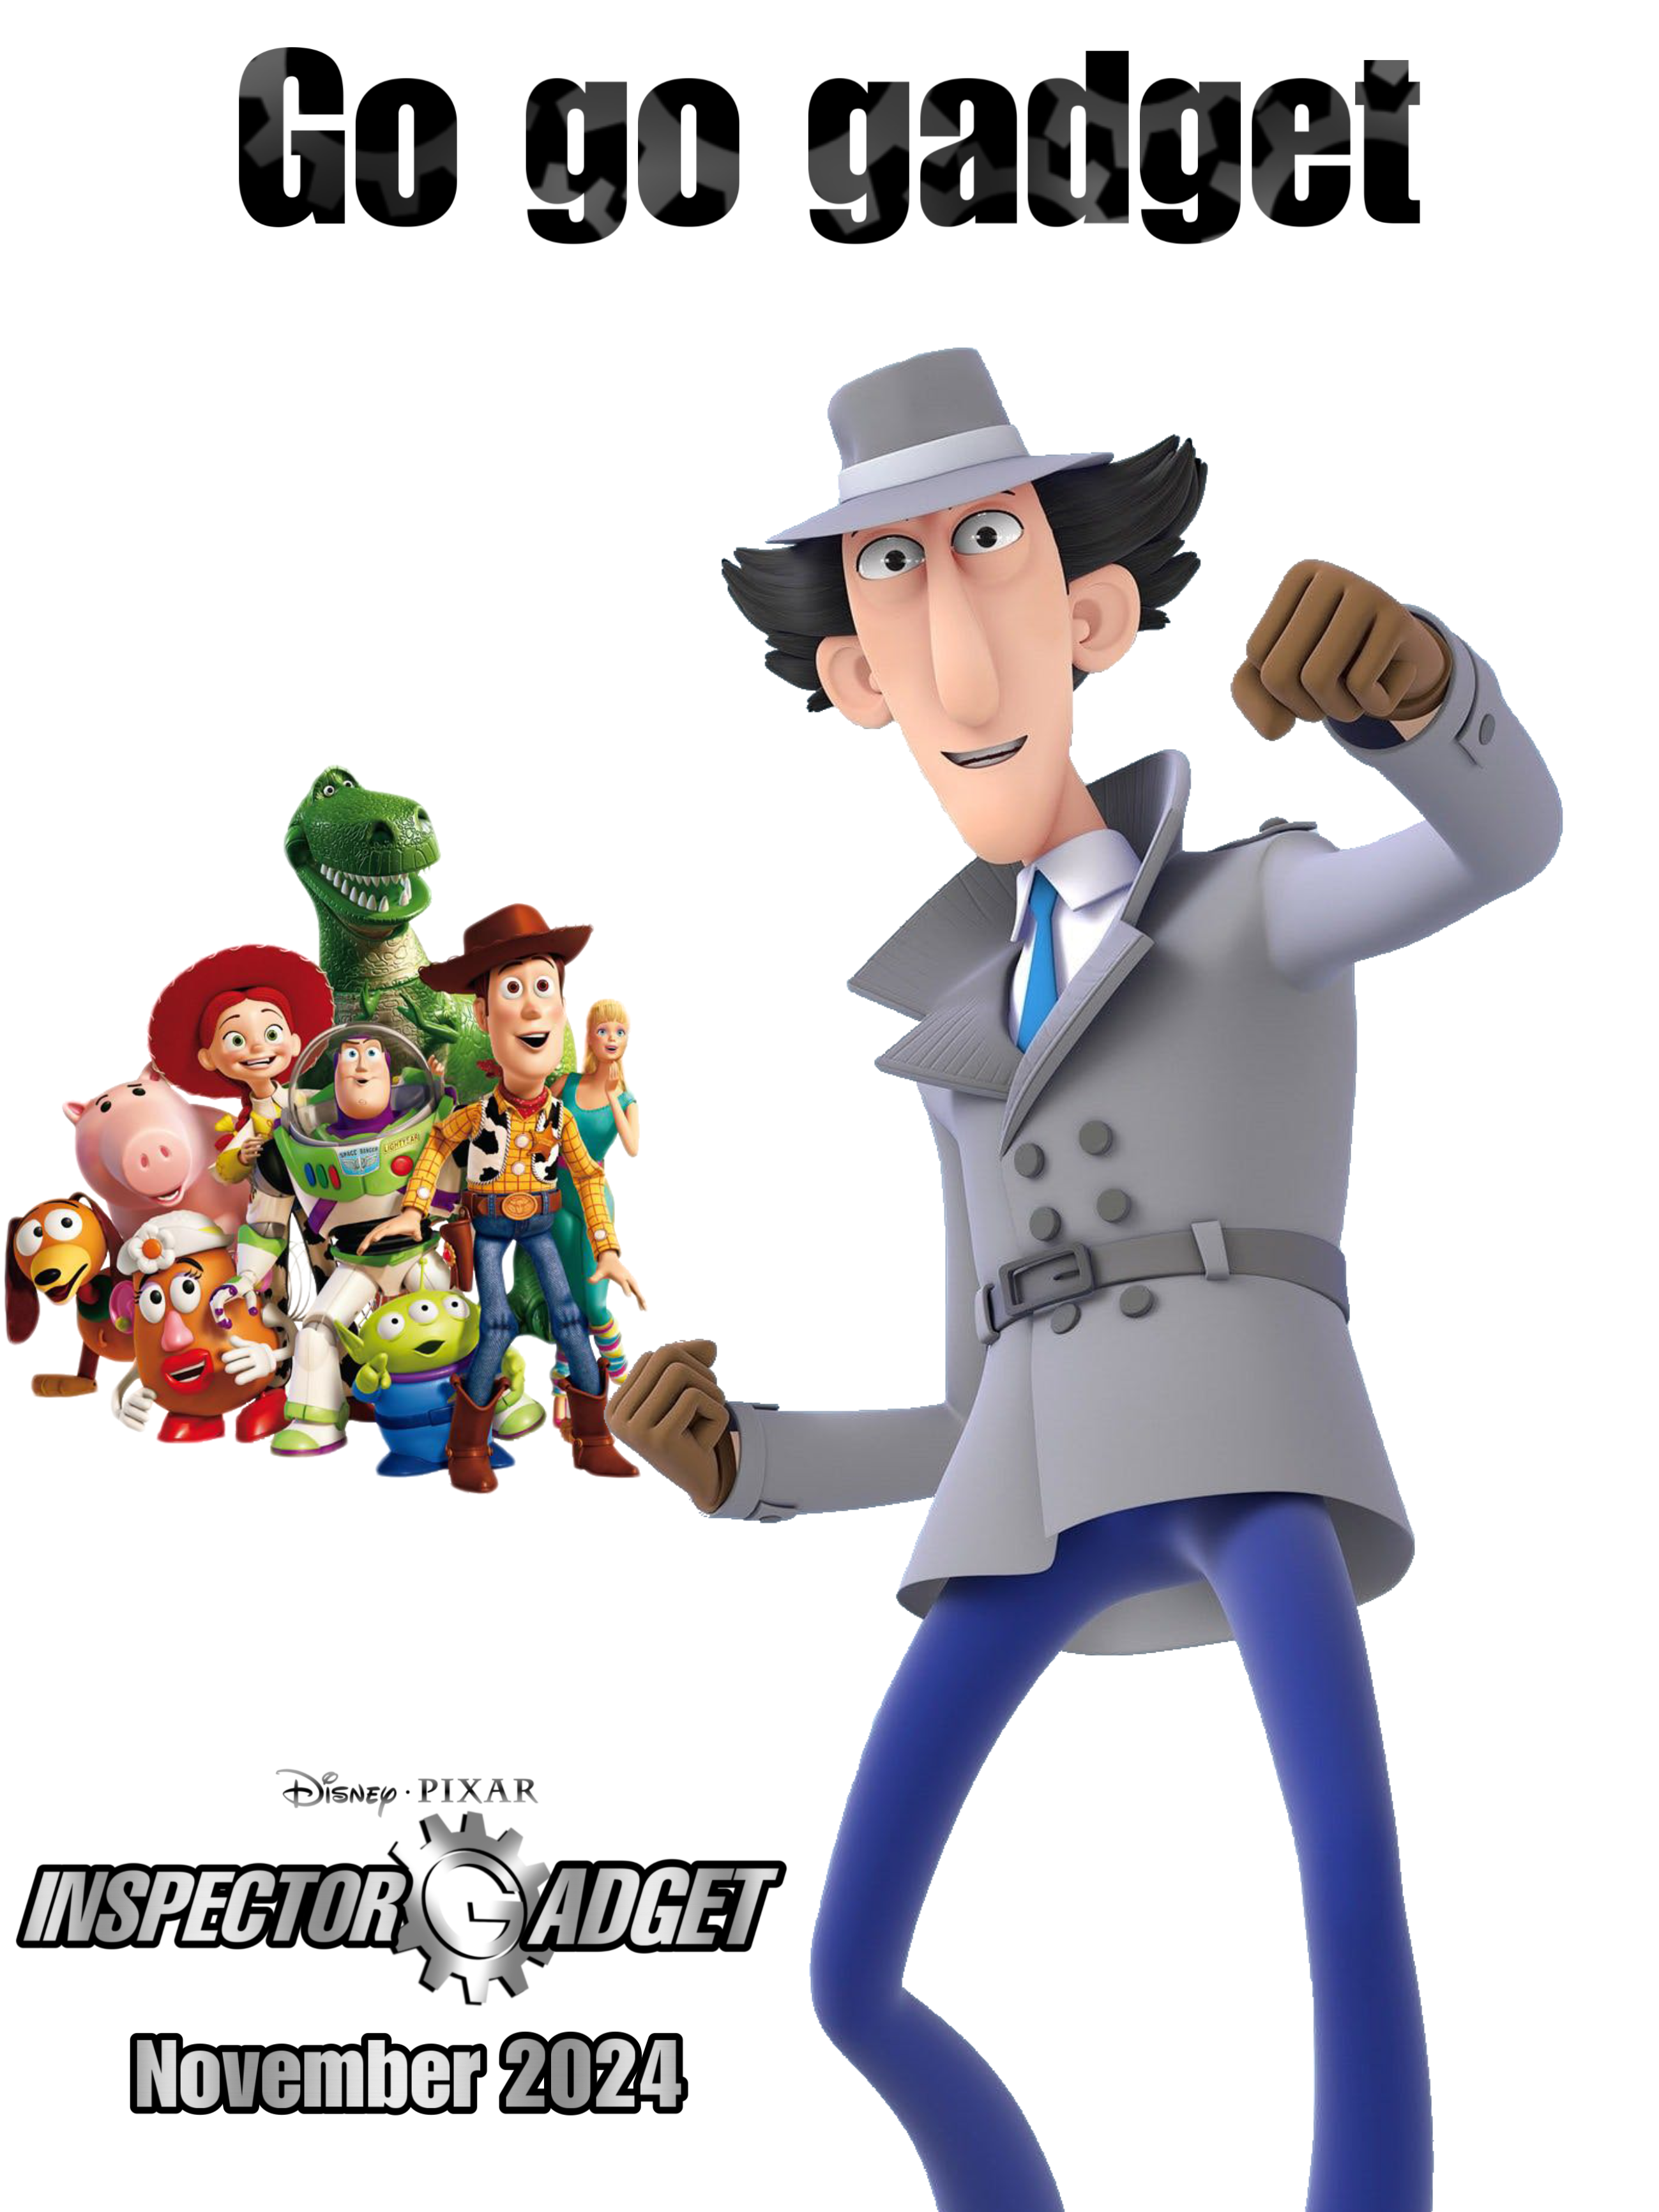 Disney Pixar Inspector Gadget Poster by seanscreations1 on DeviantArt